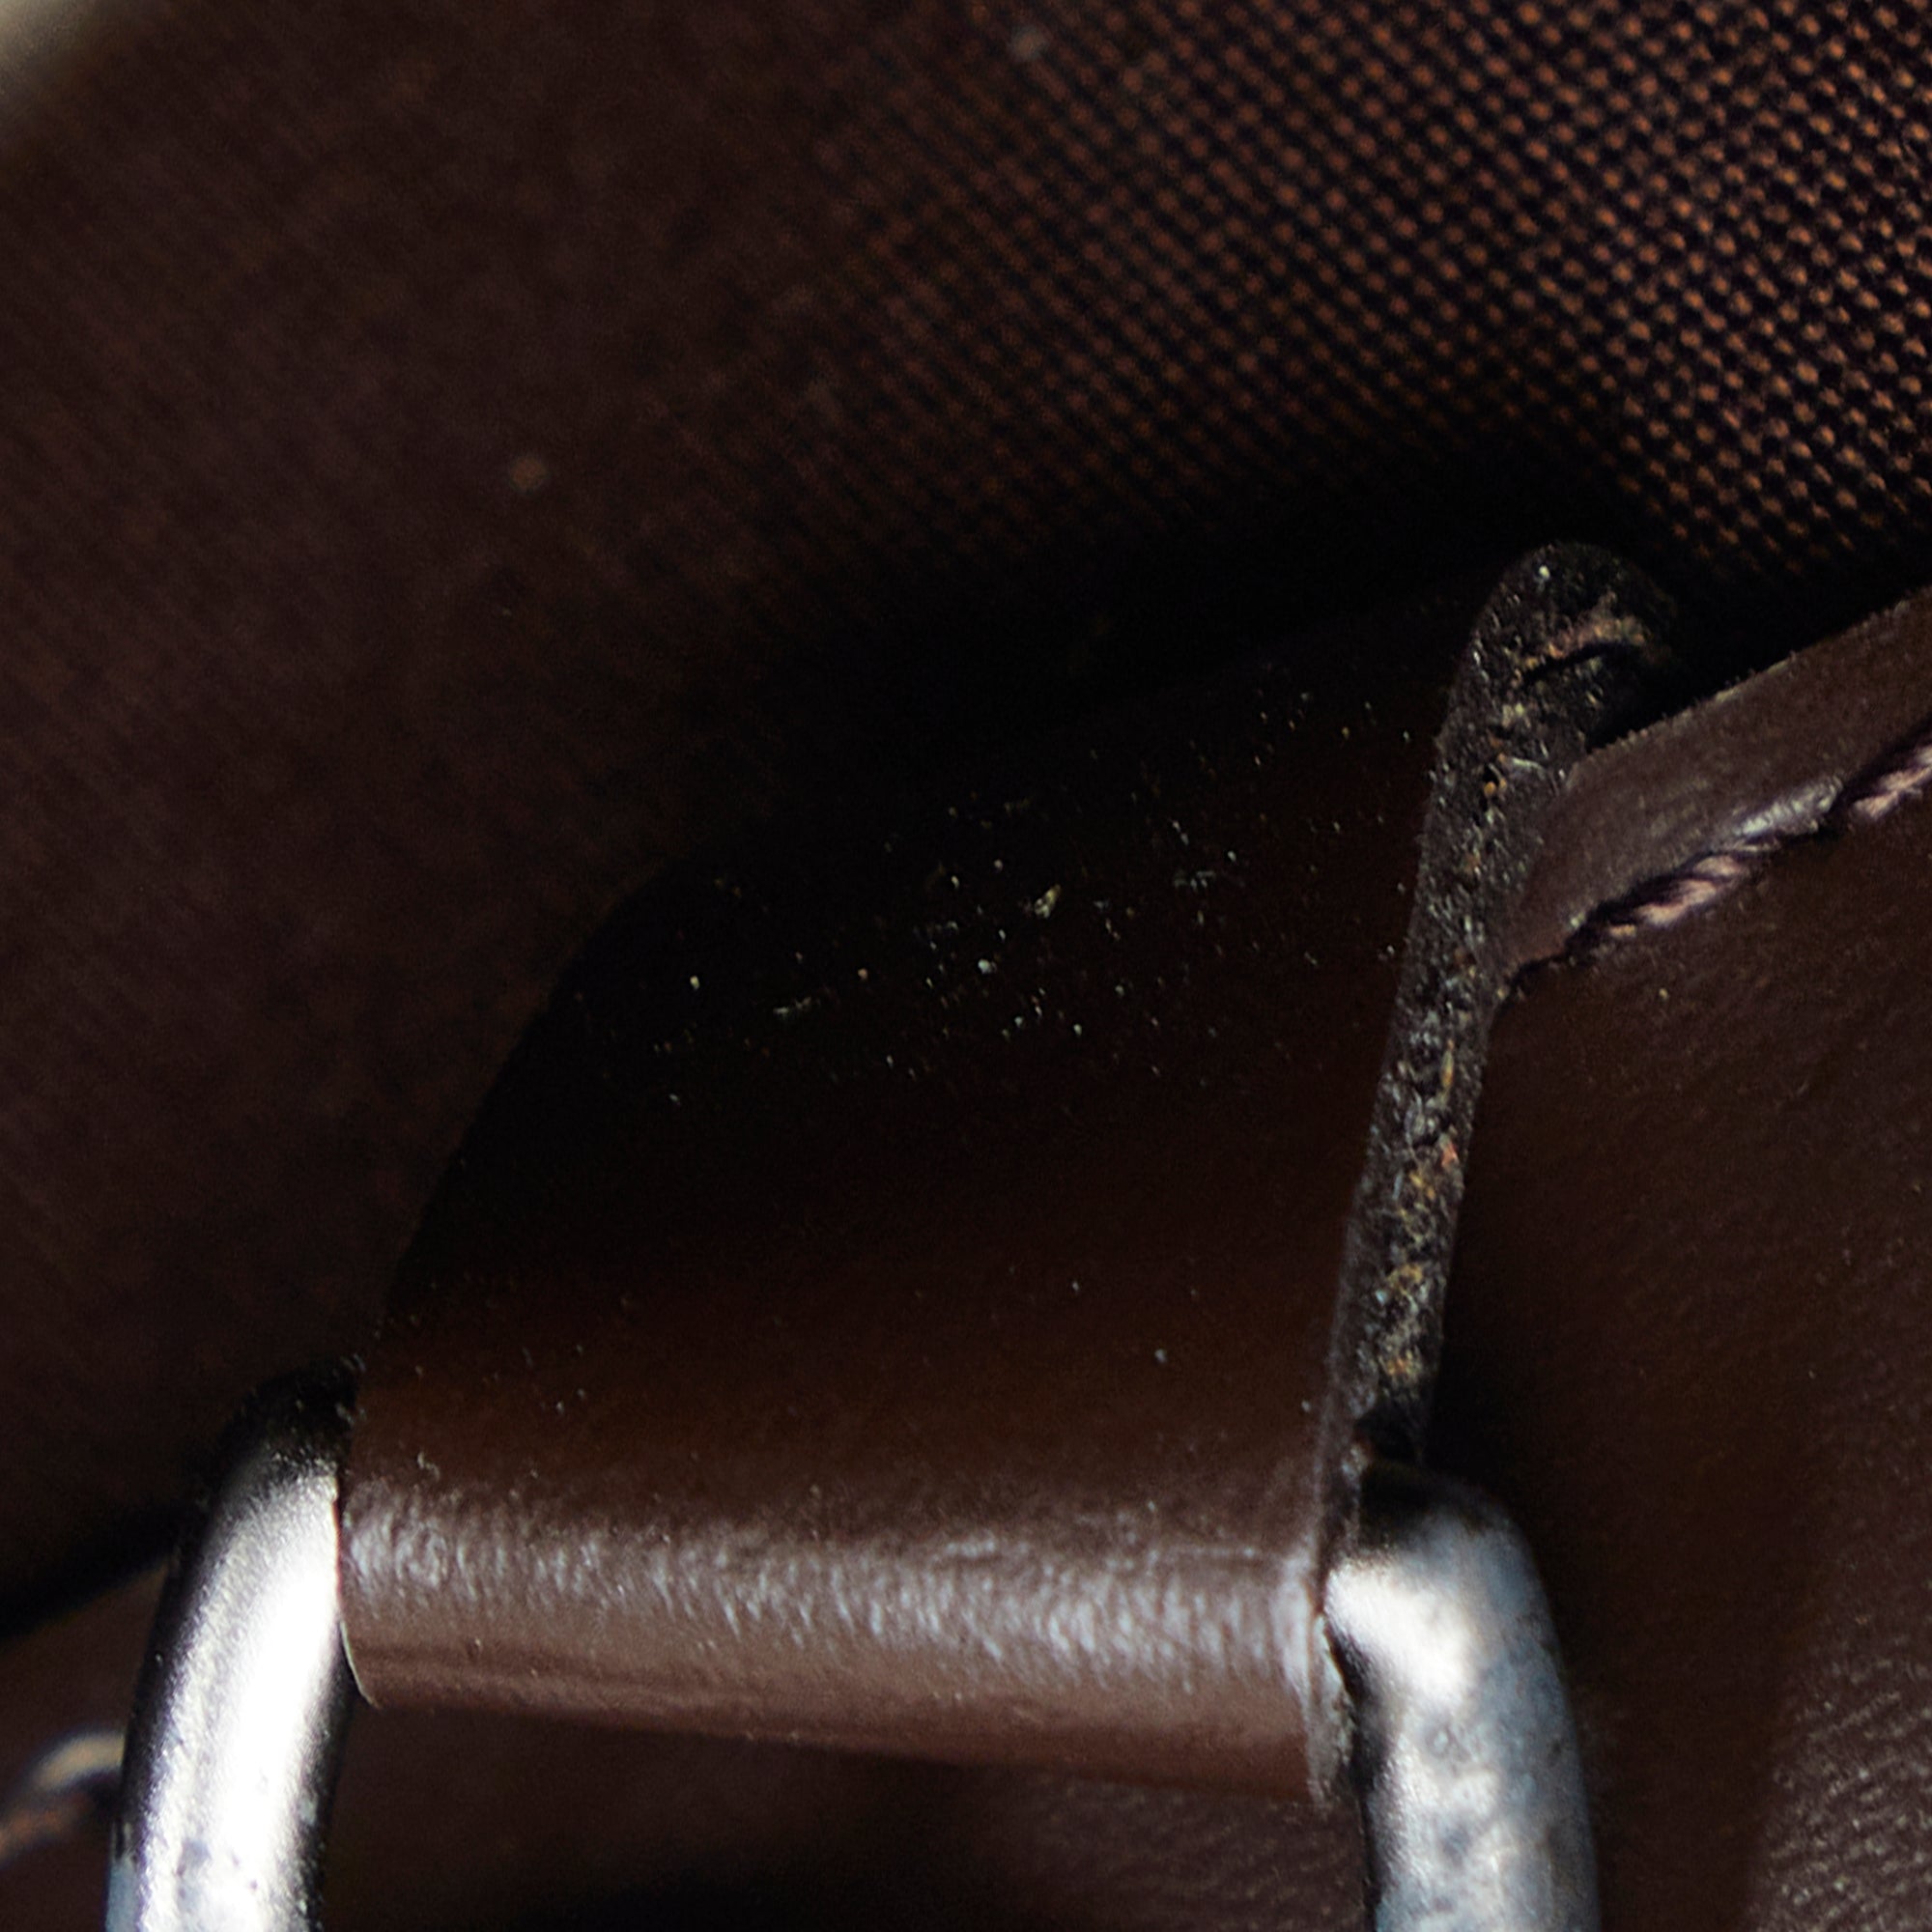 Louis Vuitton Vintage - Epi Figari MM Bag - Black - Leather and